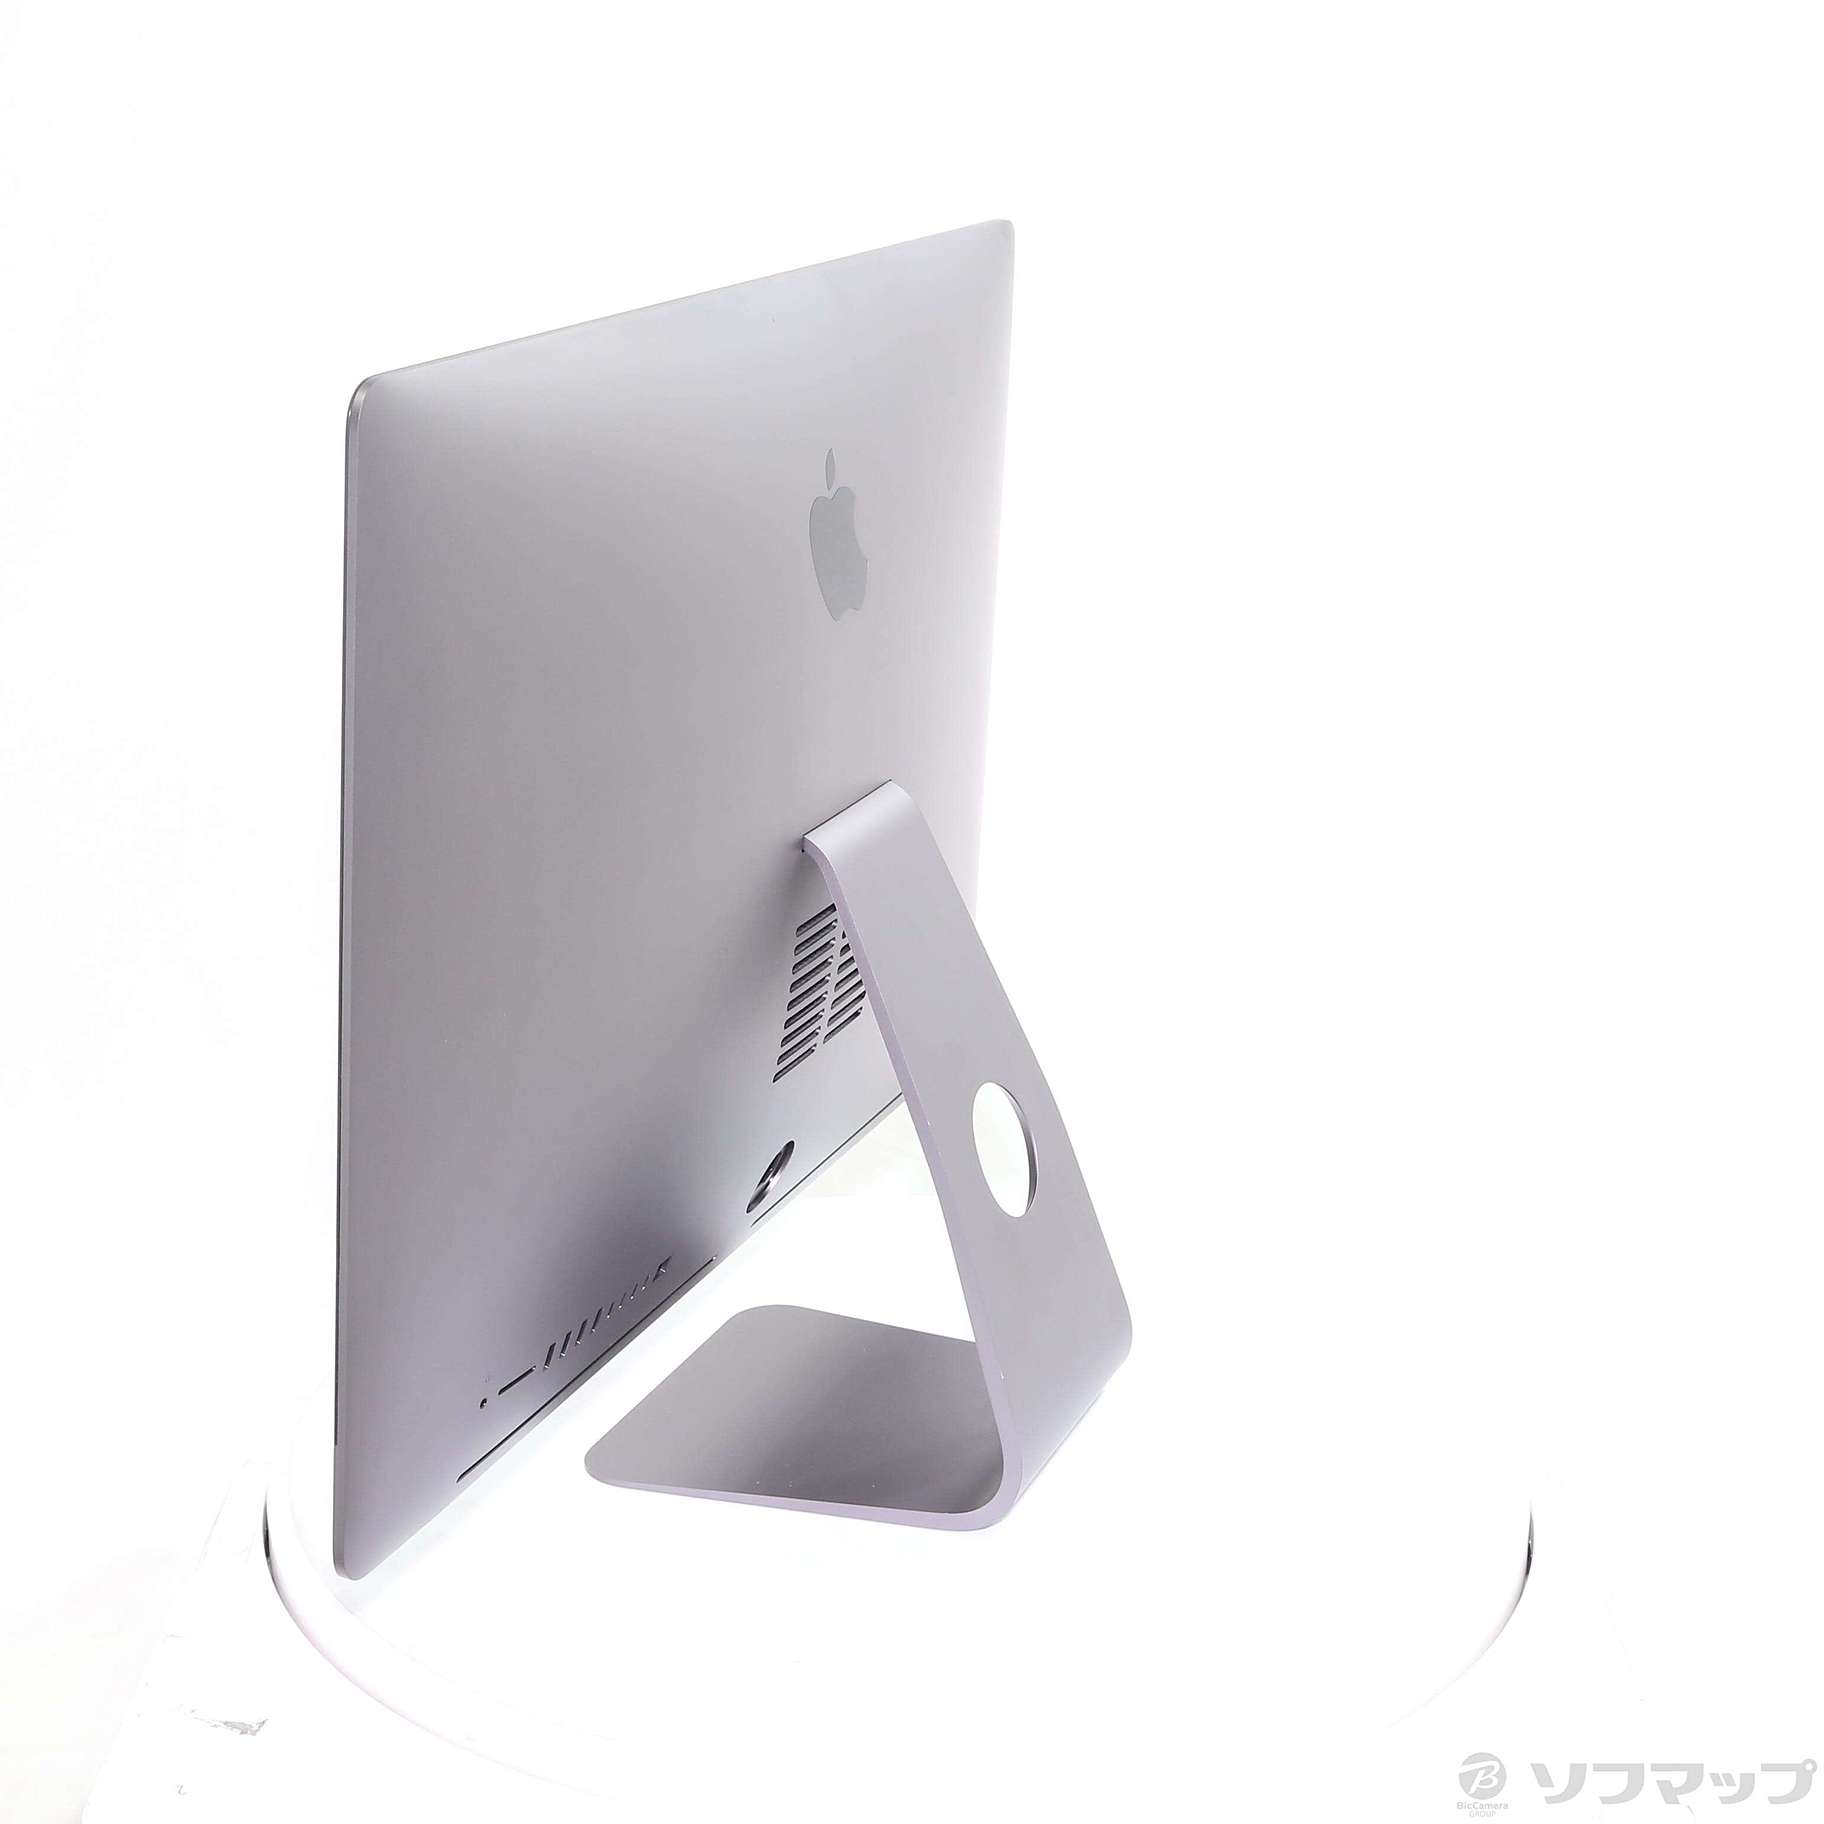 中古品〕 iMac Pro 27-inch Late 2017 MQ2Y2J／A Xeon_W 3.2GHz 32GB ...